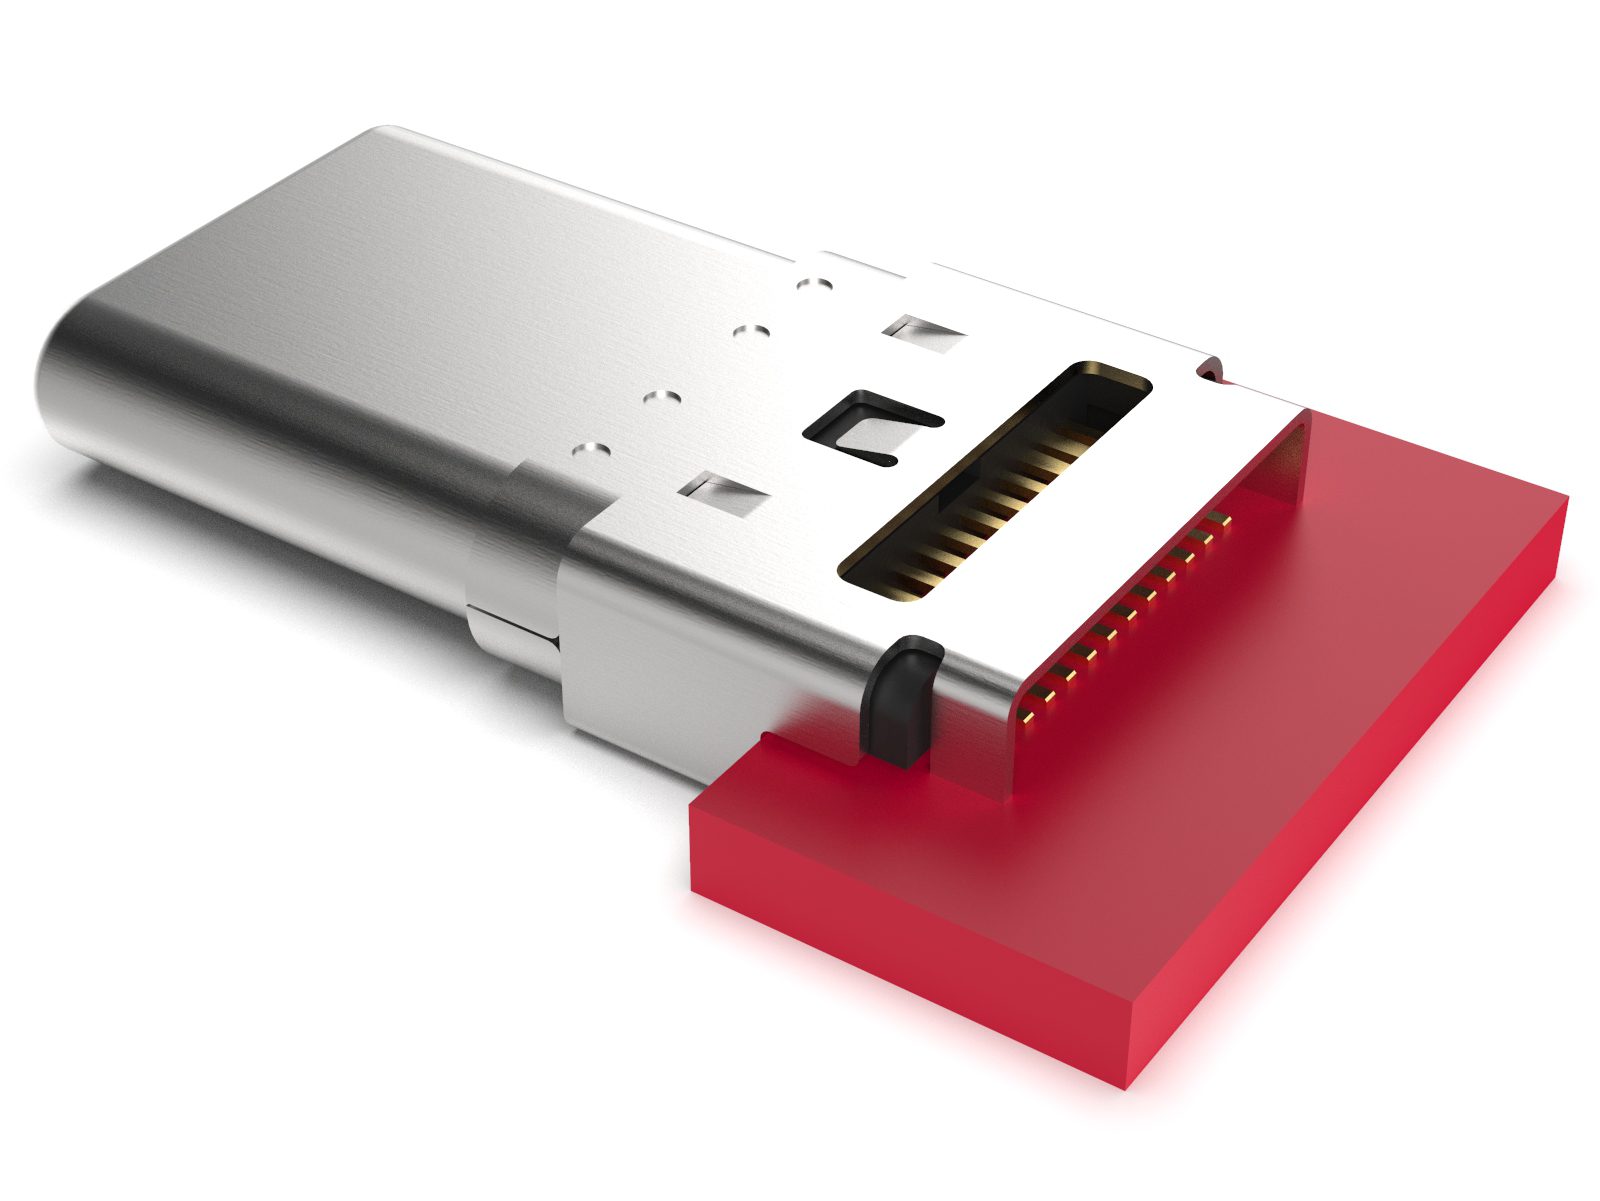 GCT’s edge-mount USB Type-C Plug